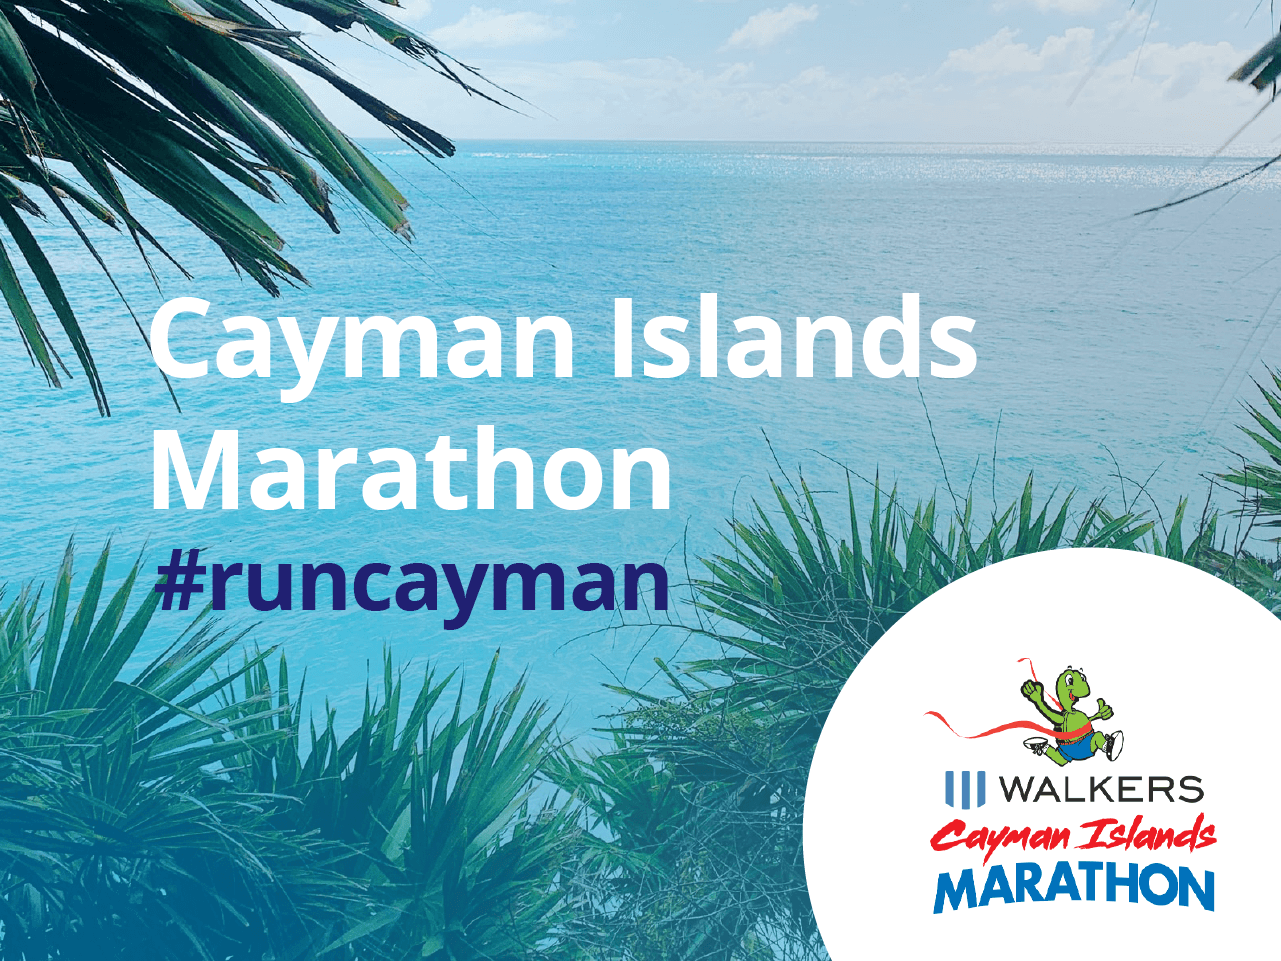 cayman-islands-marathon-badge-and-beach-side